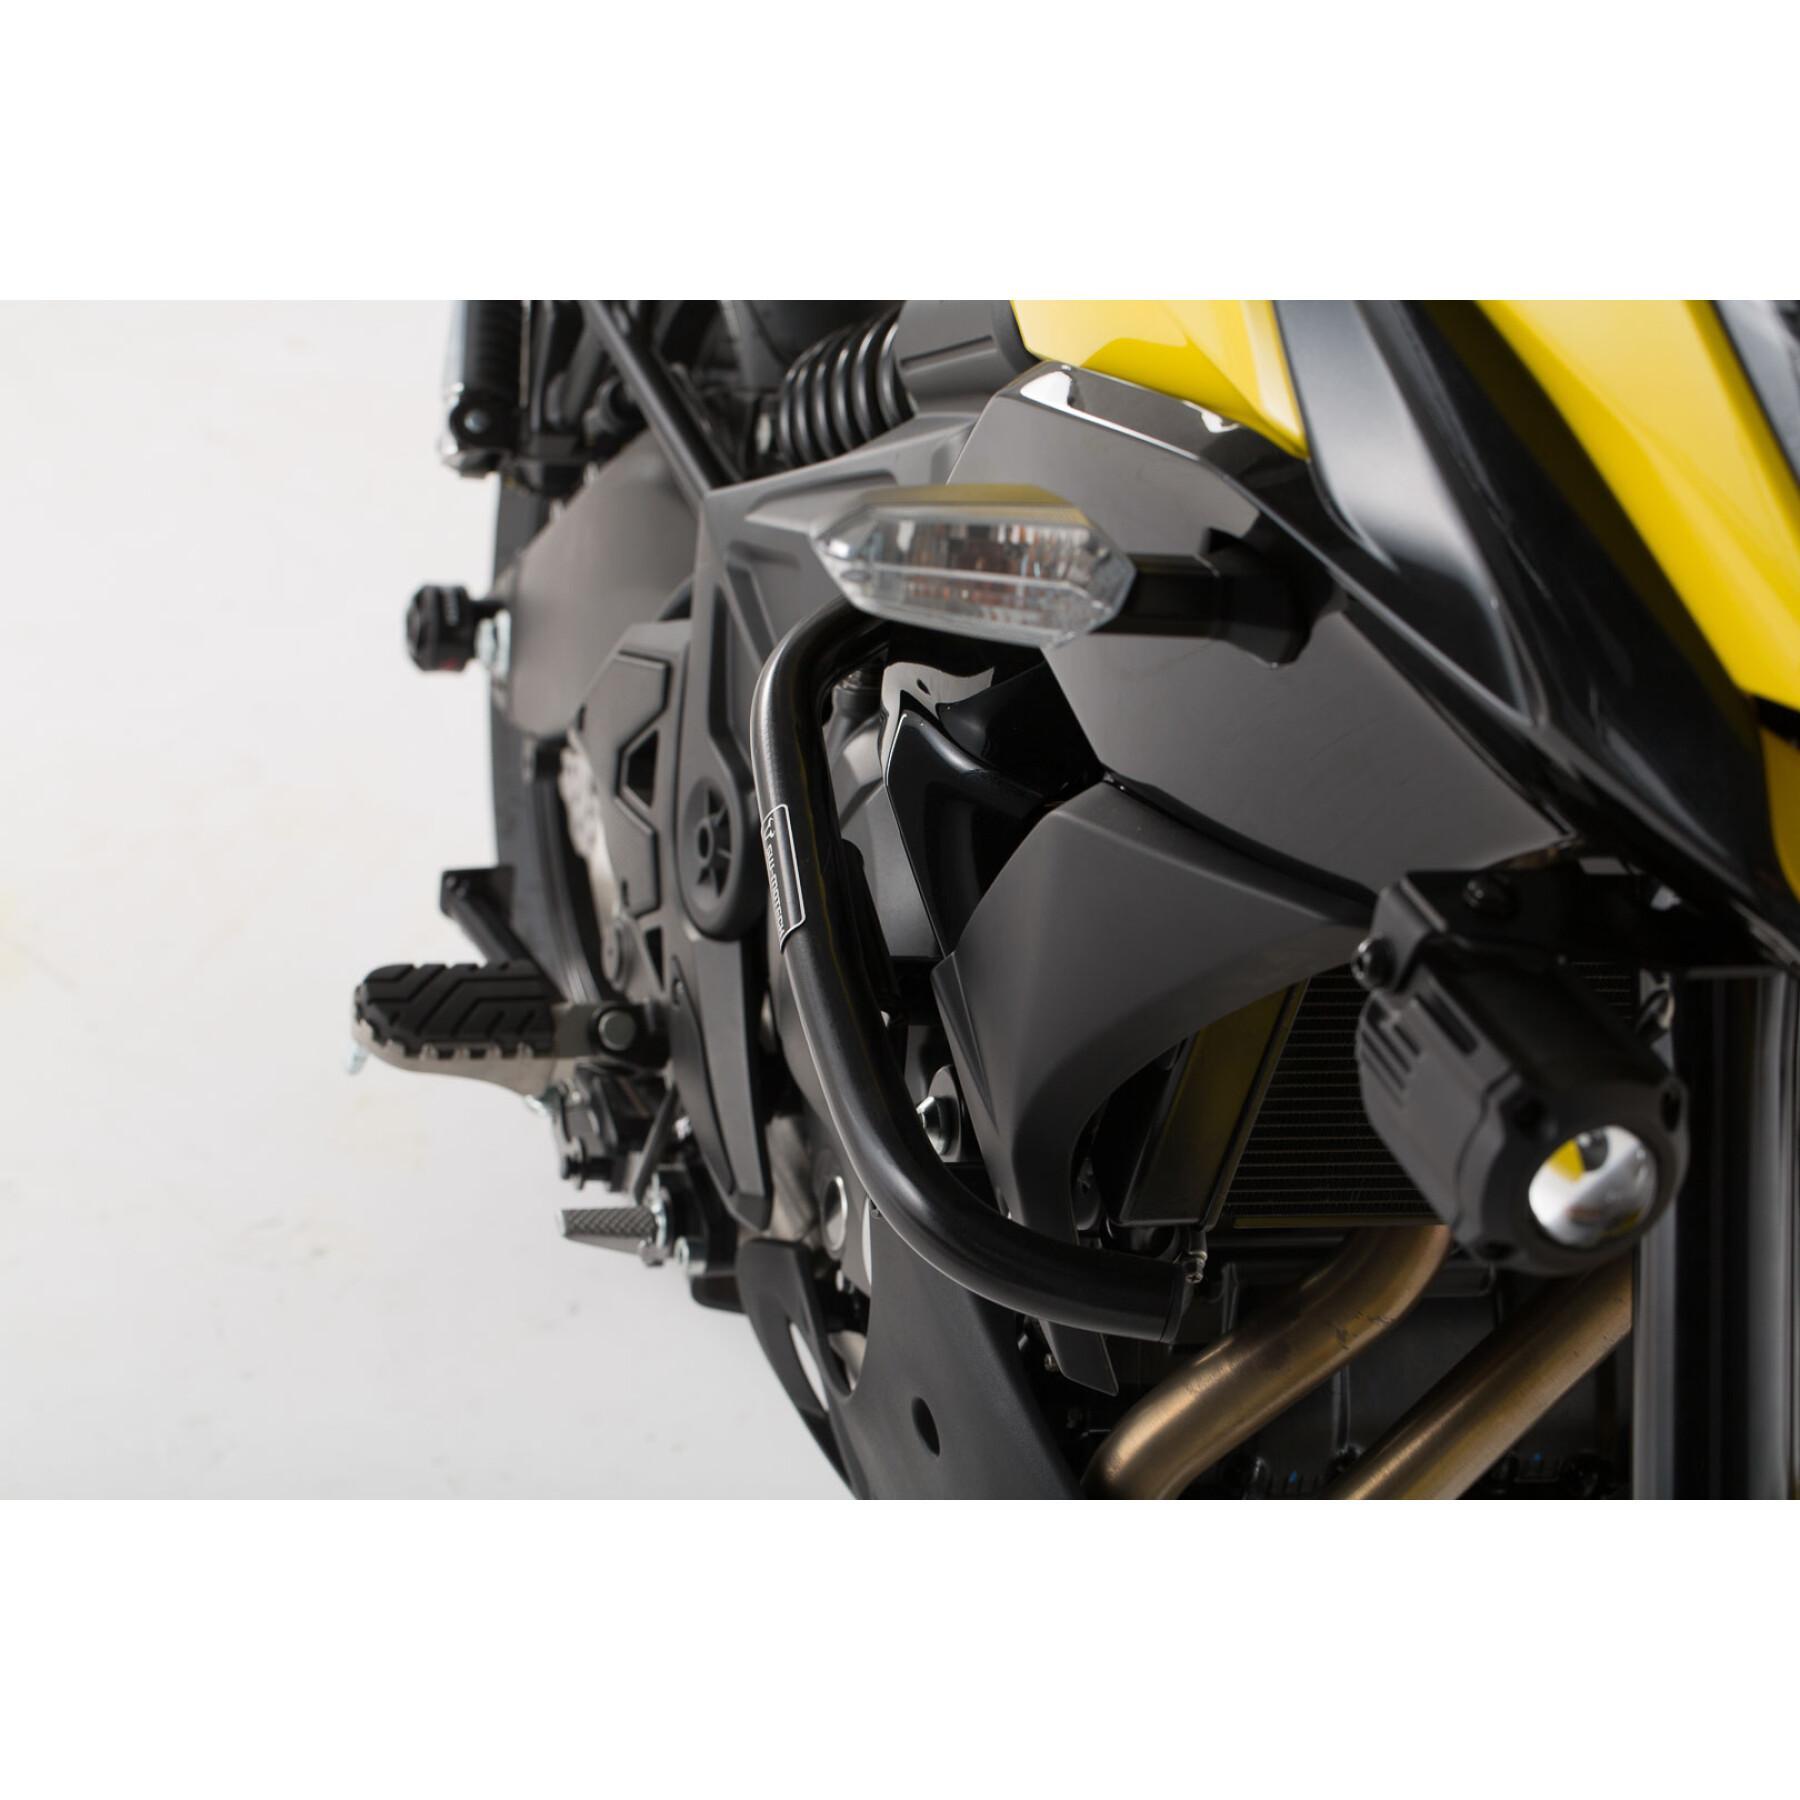 Motorrad-Standartenschutz Sw-Motech Crashbar Kawasaki Versys 650 (15-)